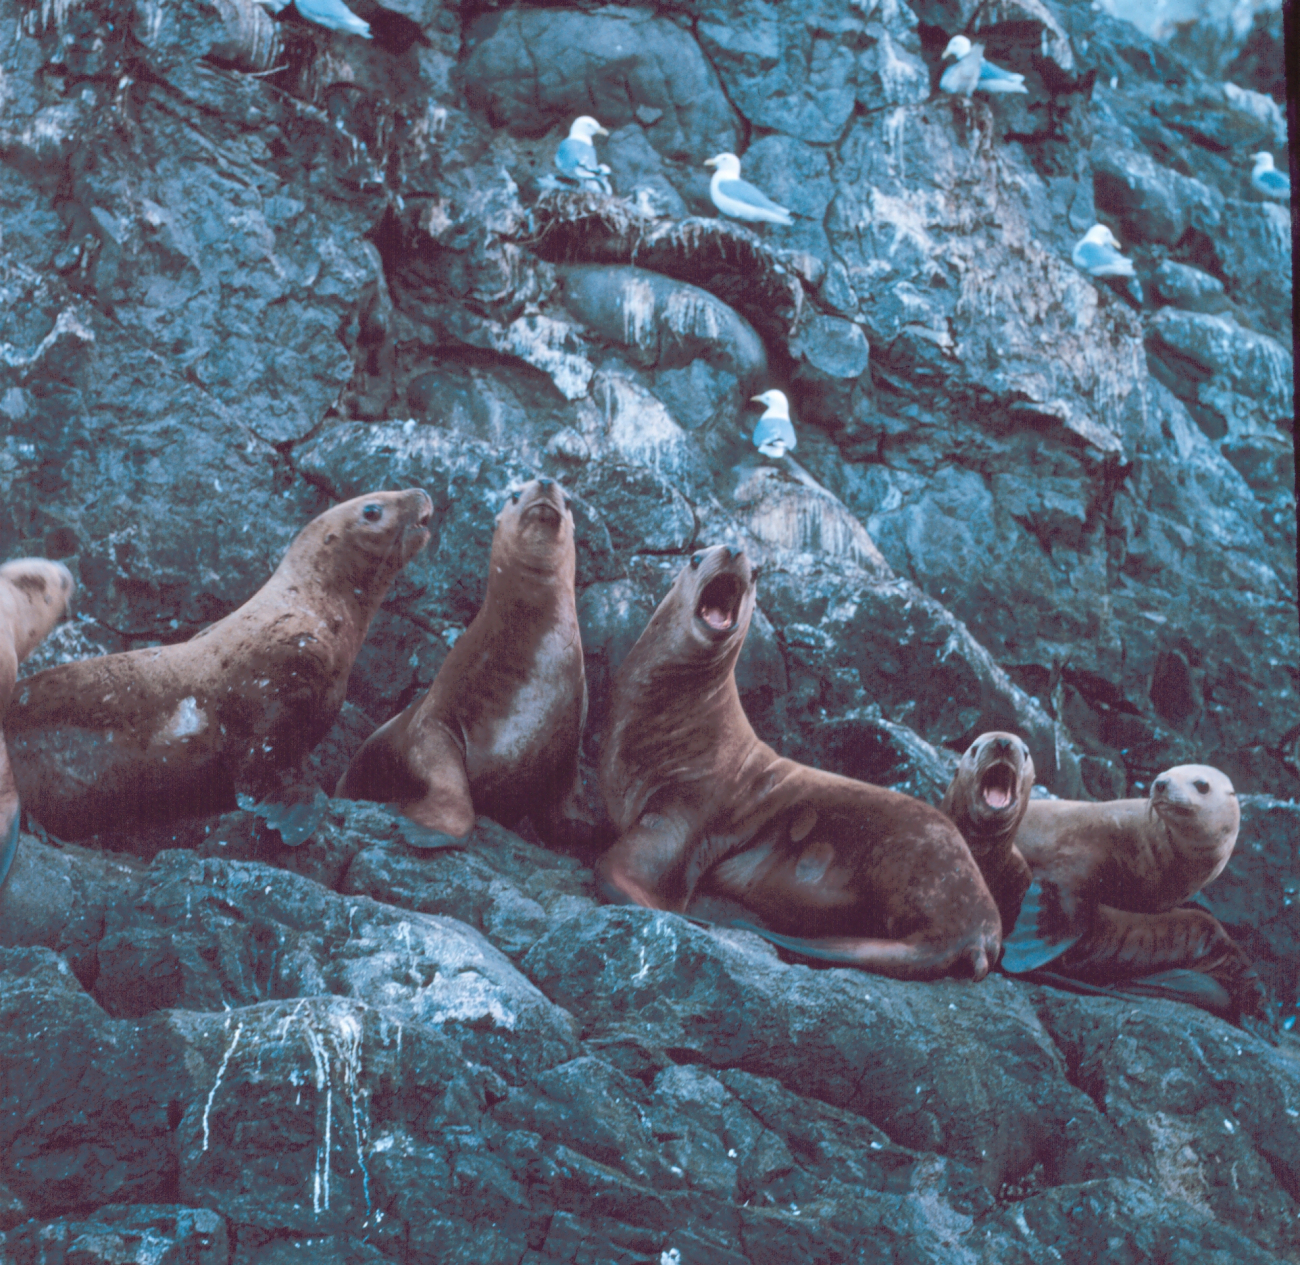 A vociferous group of Steller sea lions - Eumetopias jubatus